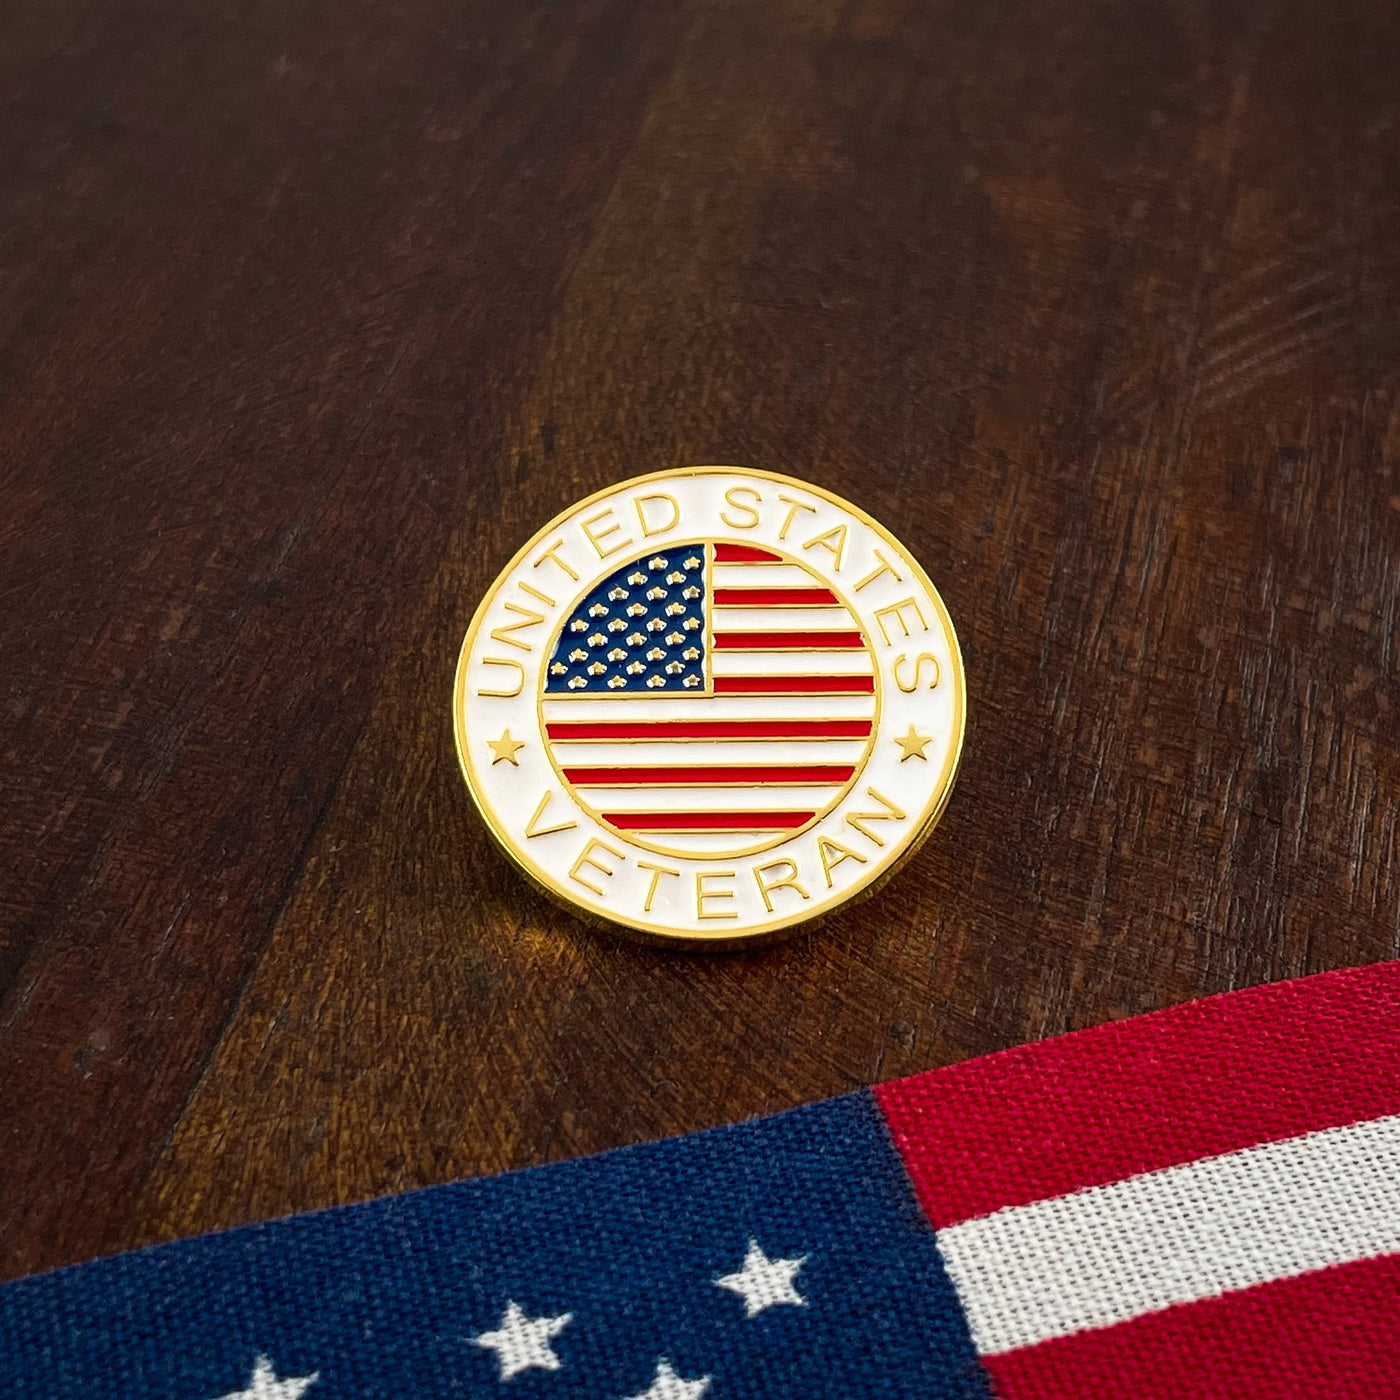 Gold United States Veteran Pin